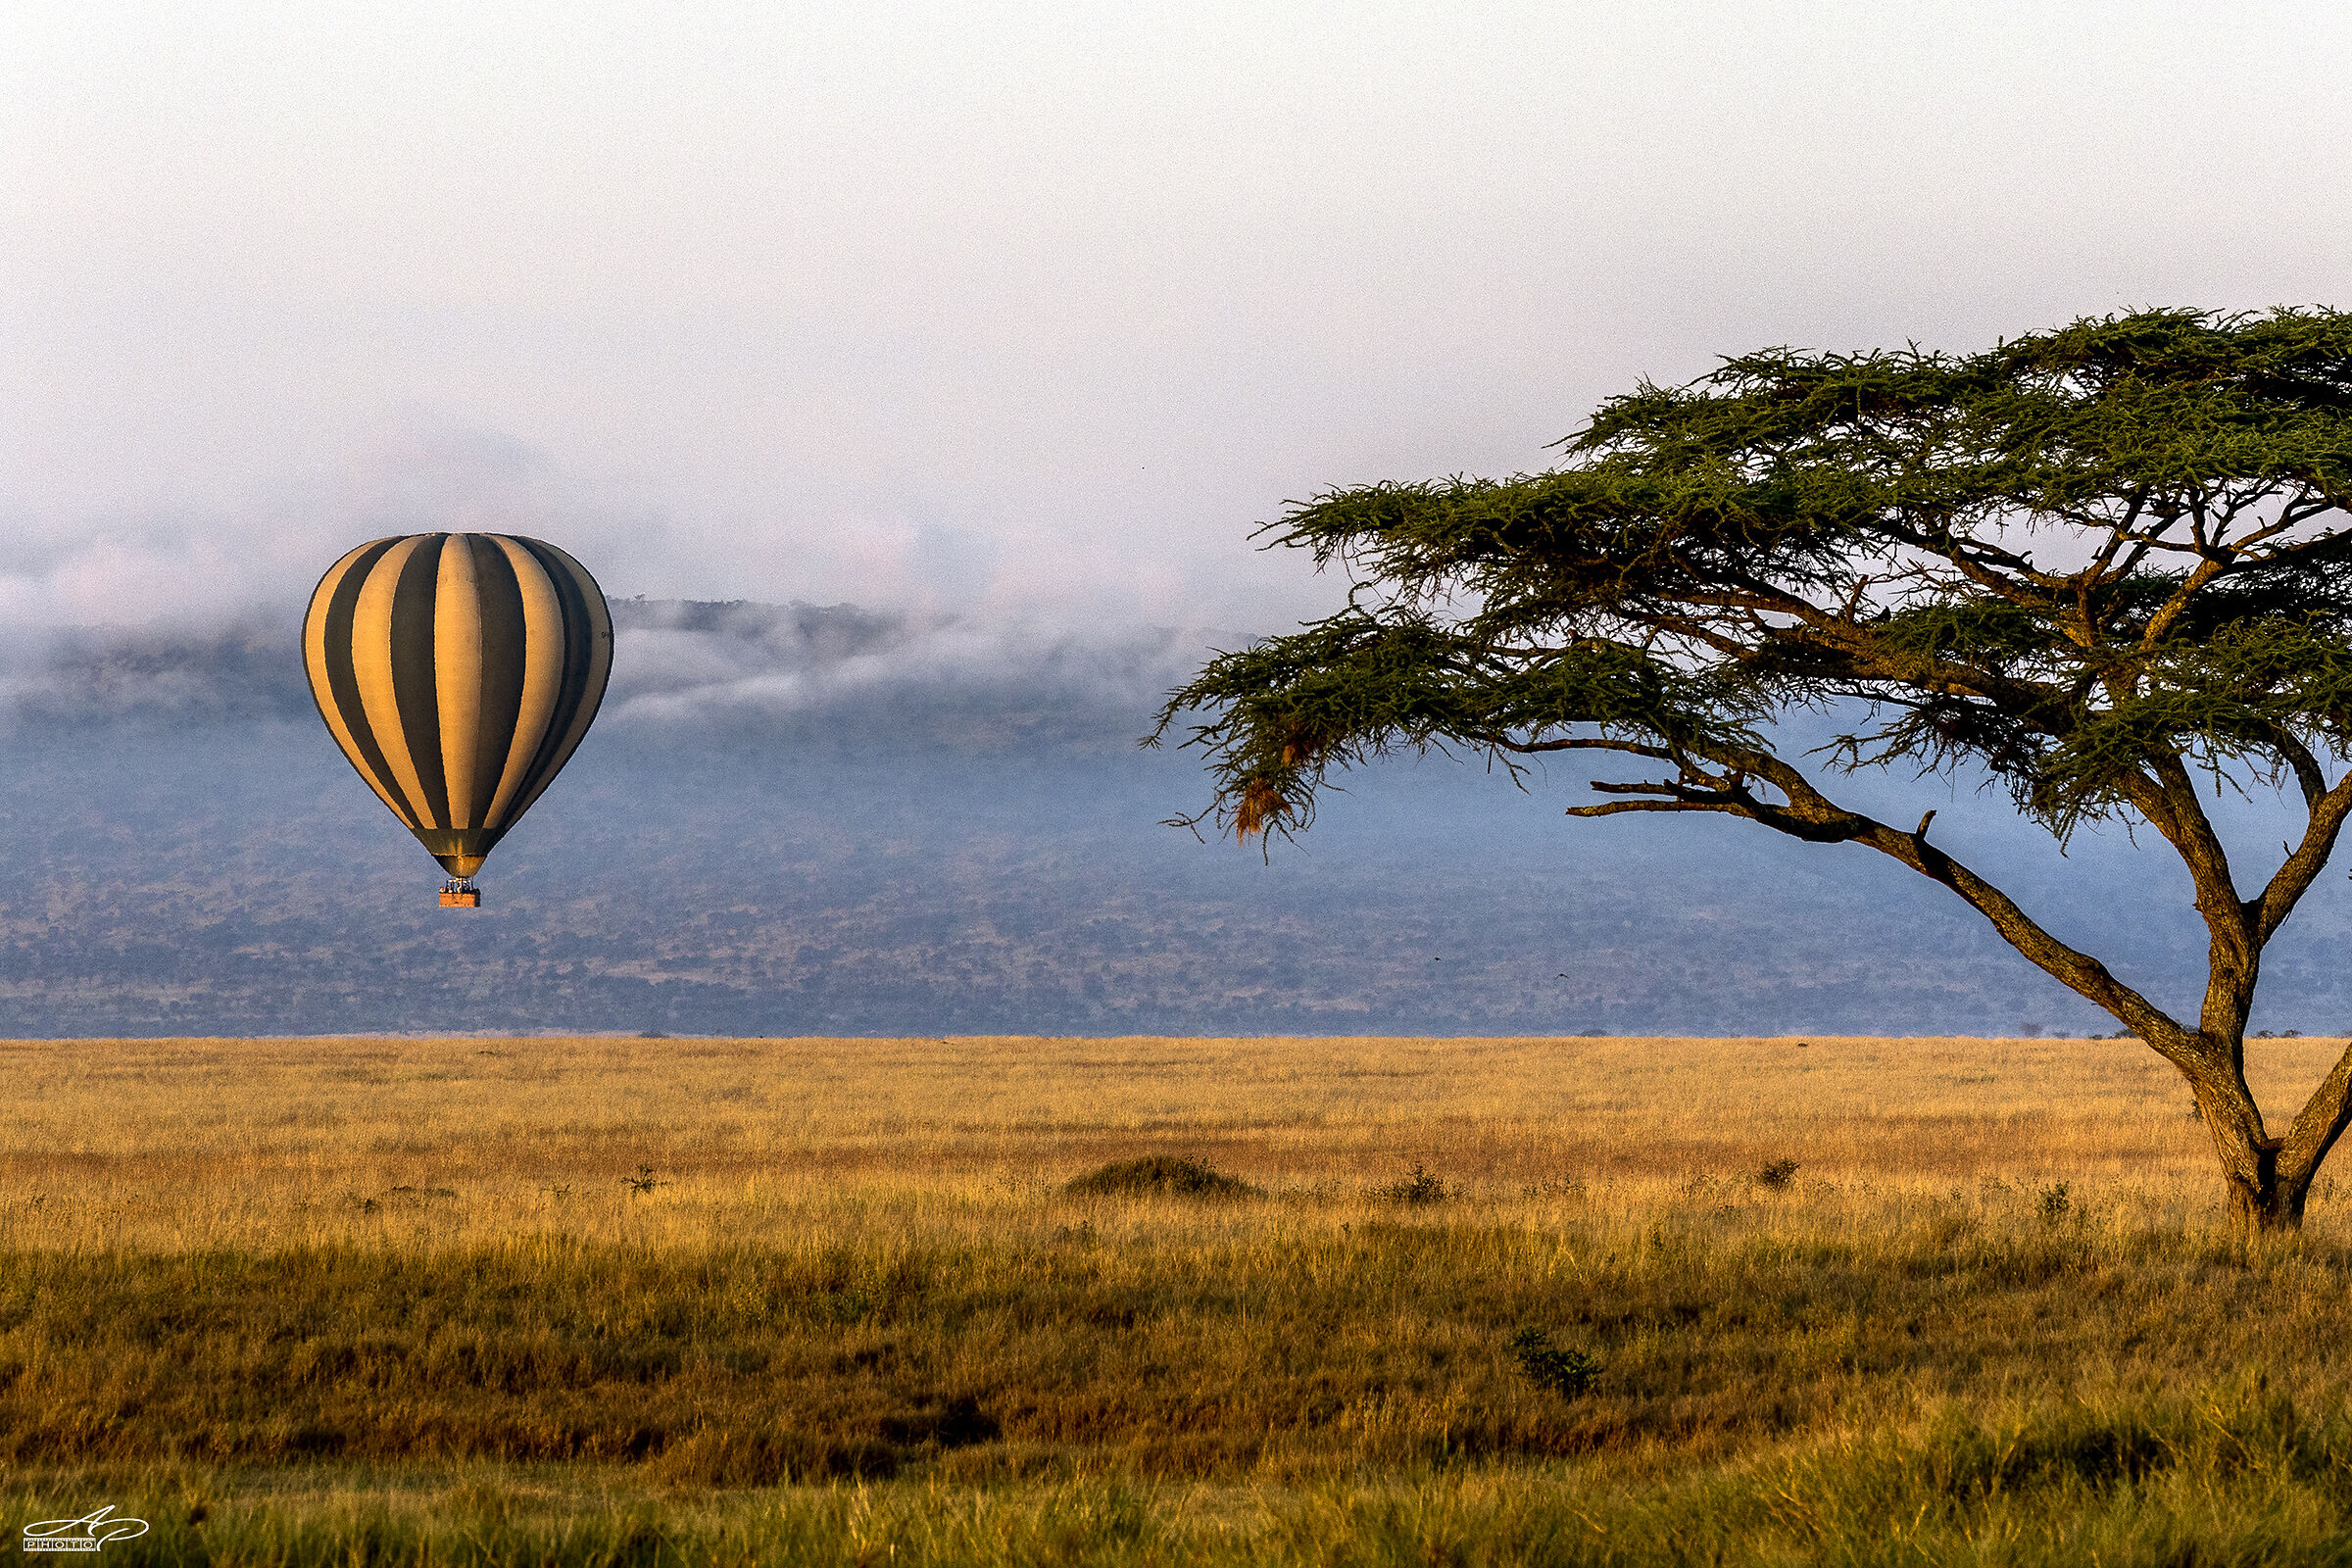 Africa by hot air balloon...